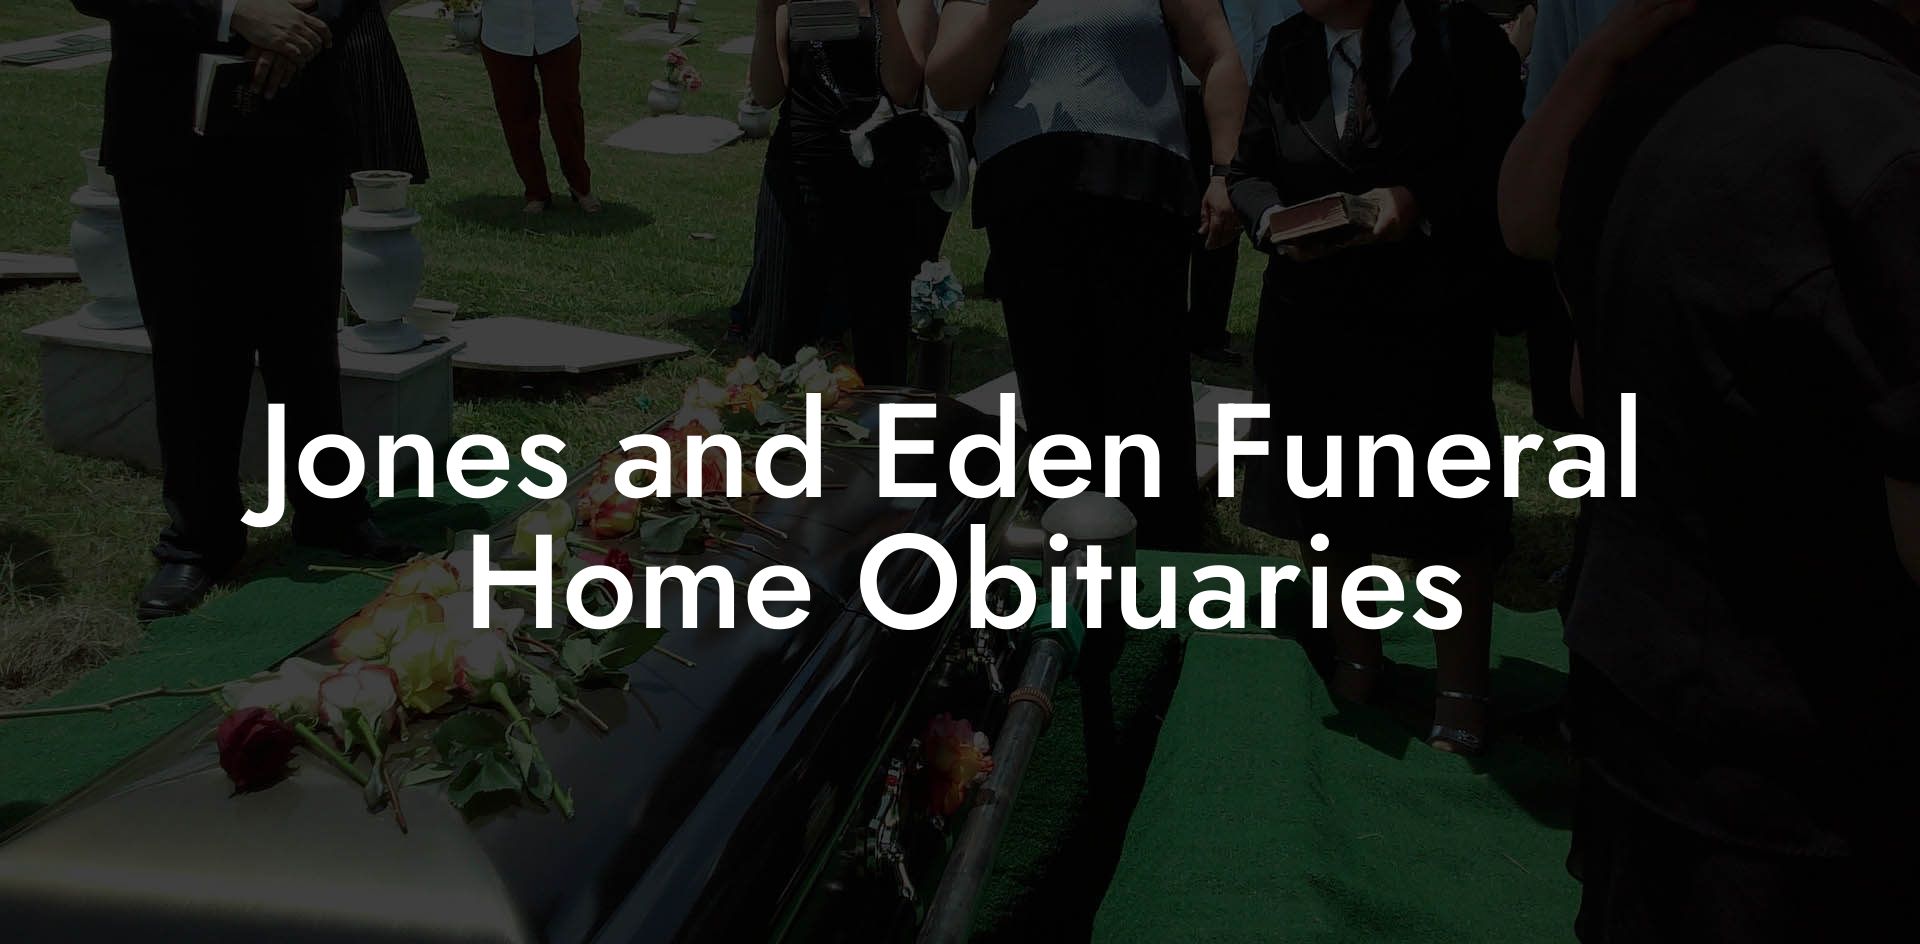 Jones and Eden Funeral Home Obituaries